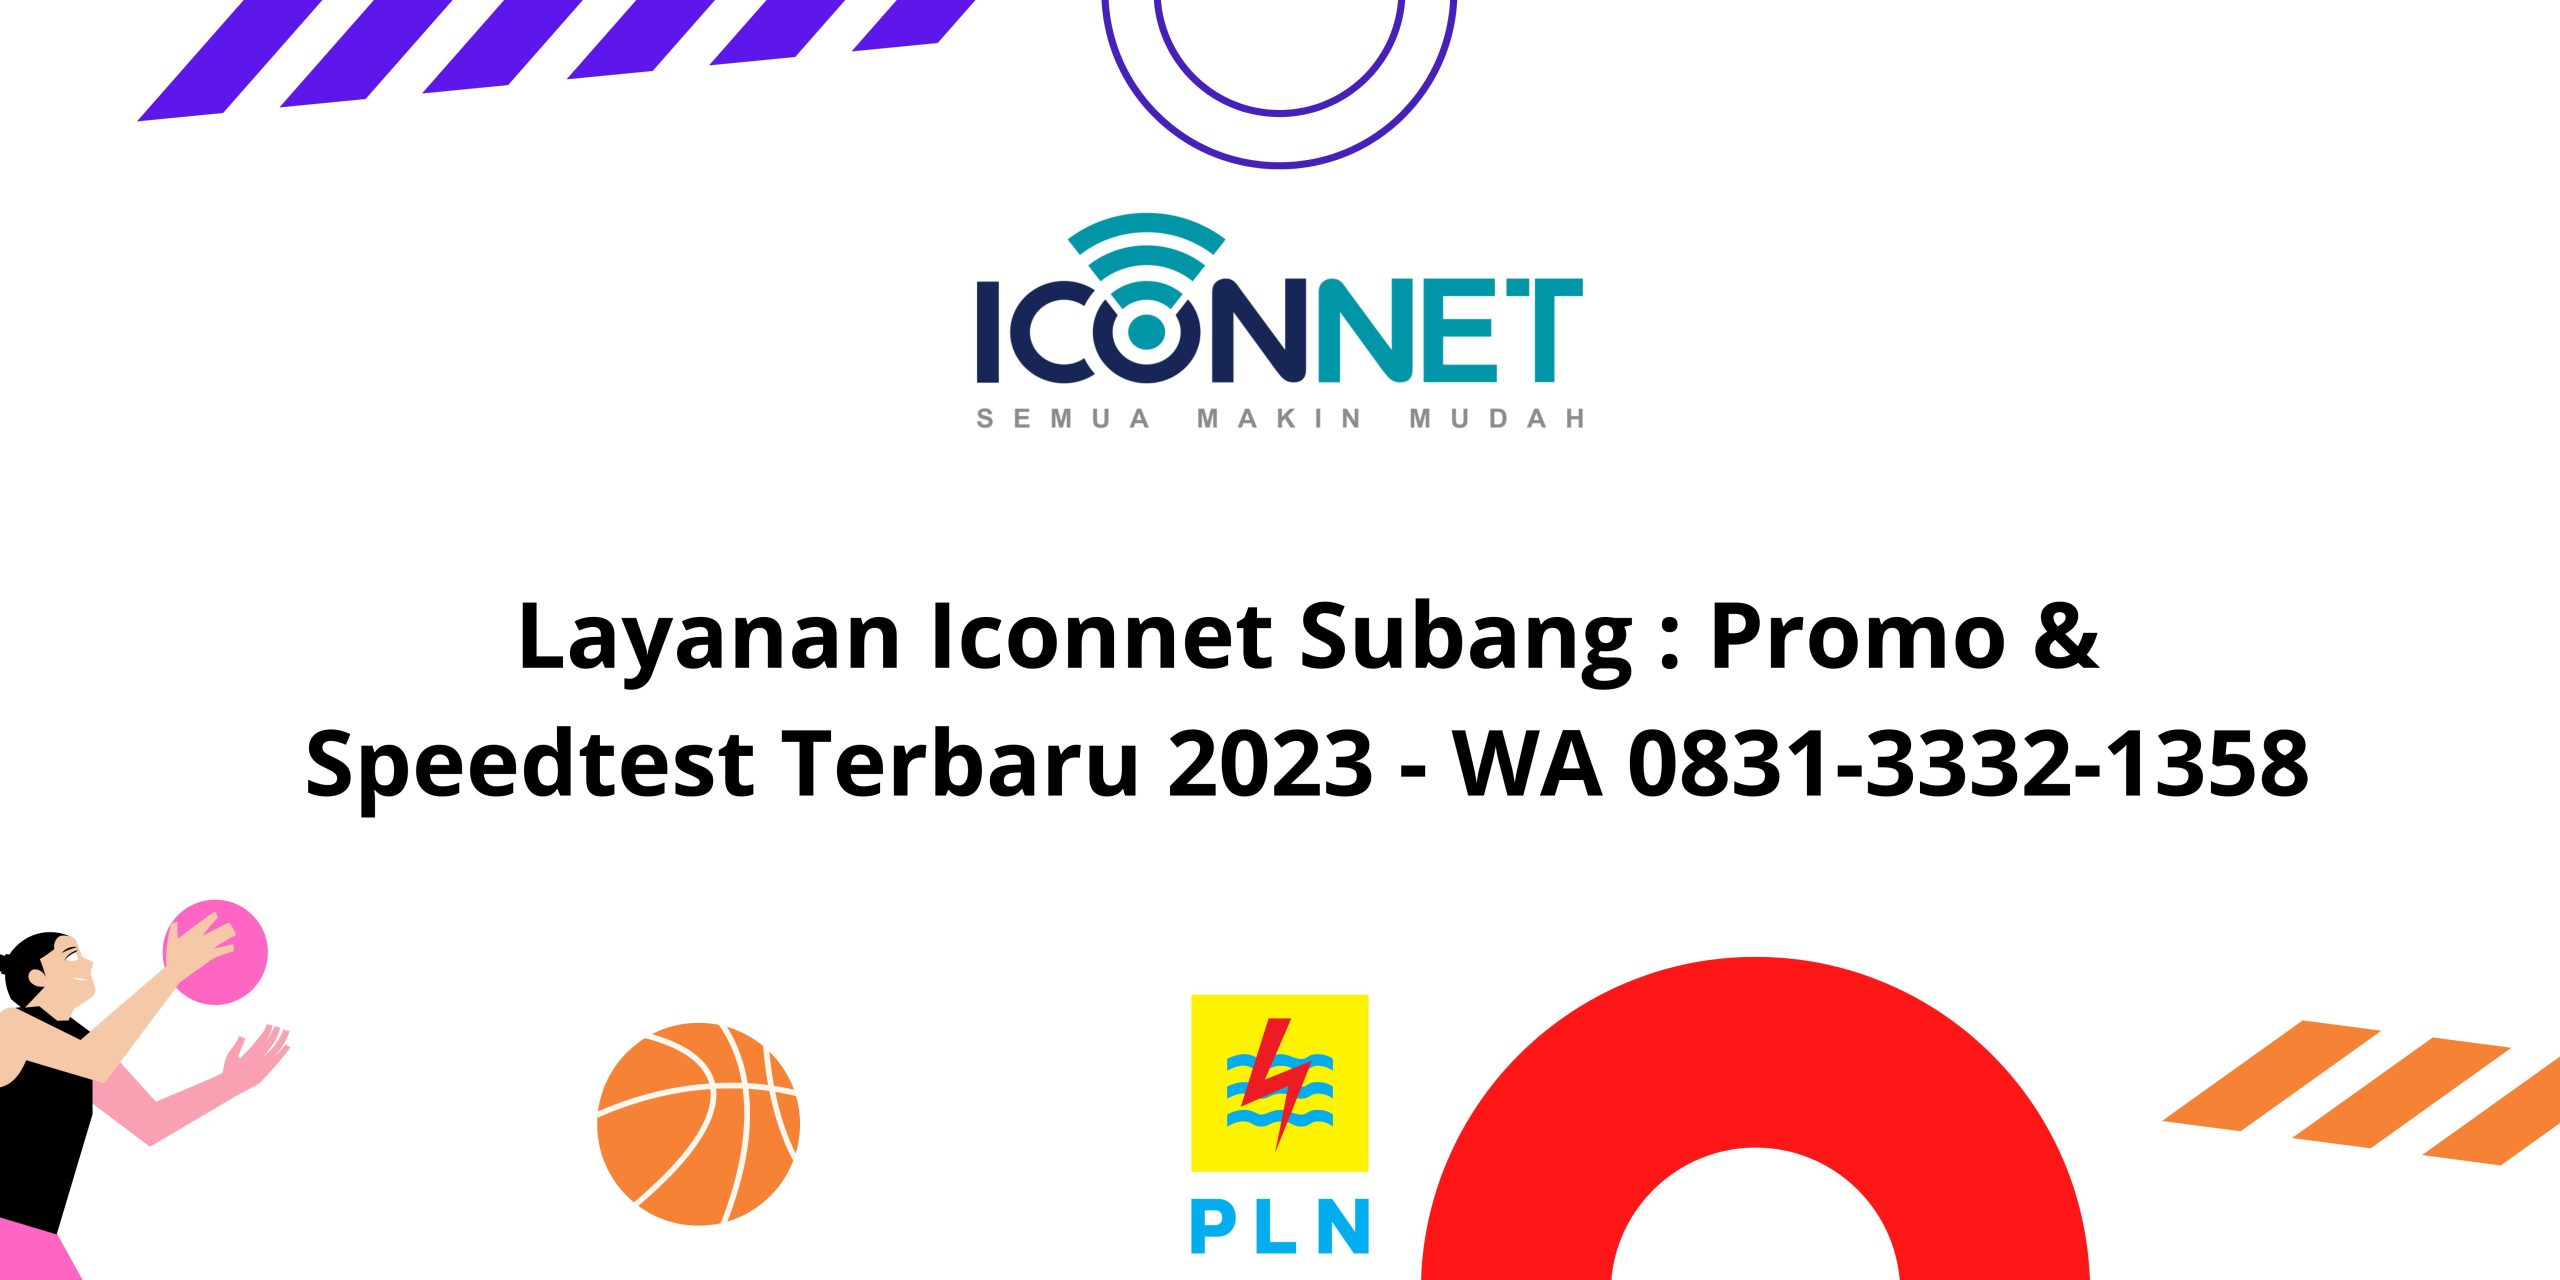 Layanan Iconnet Subang